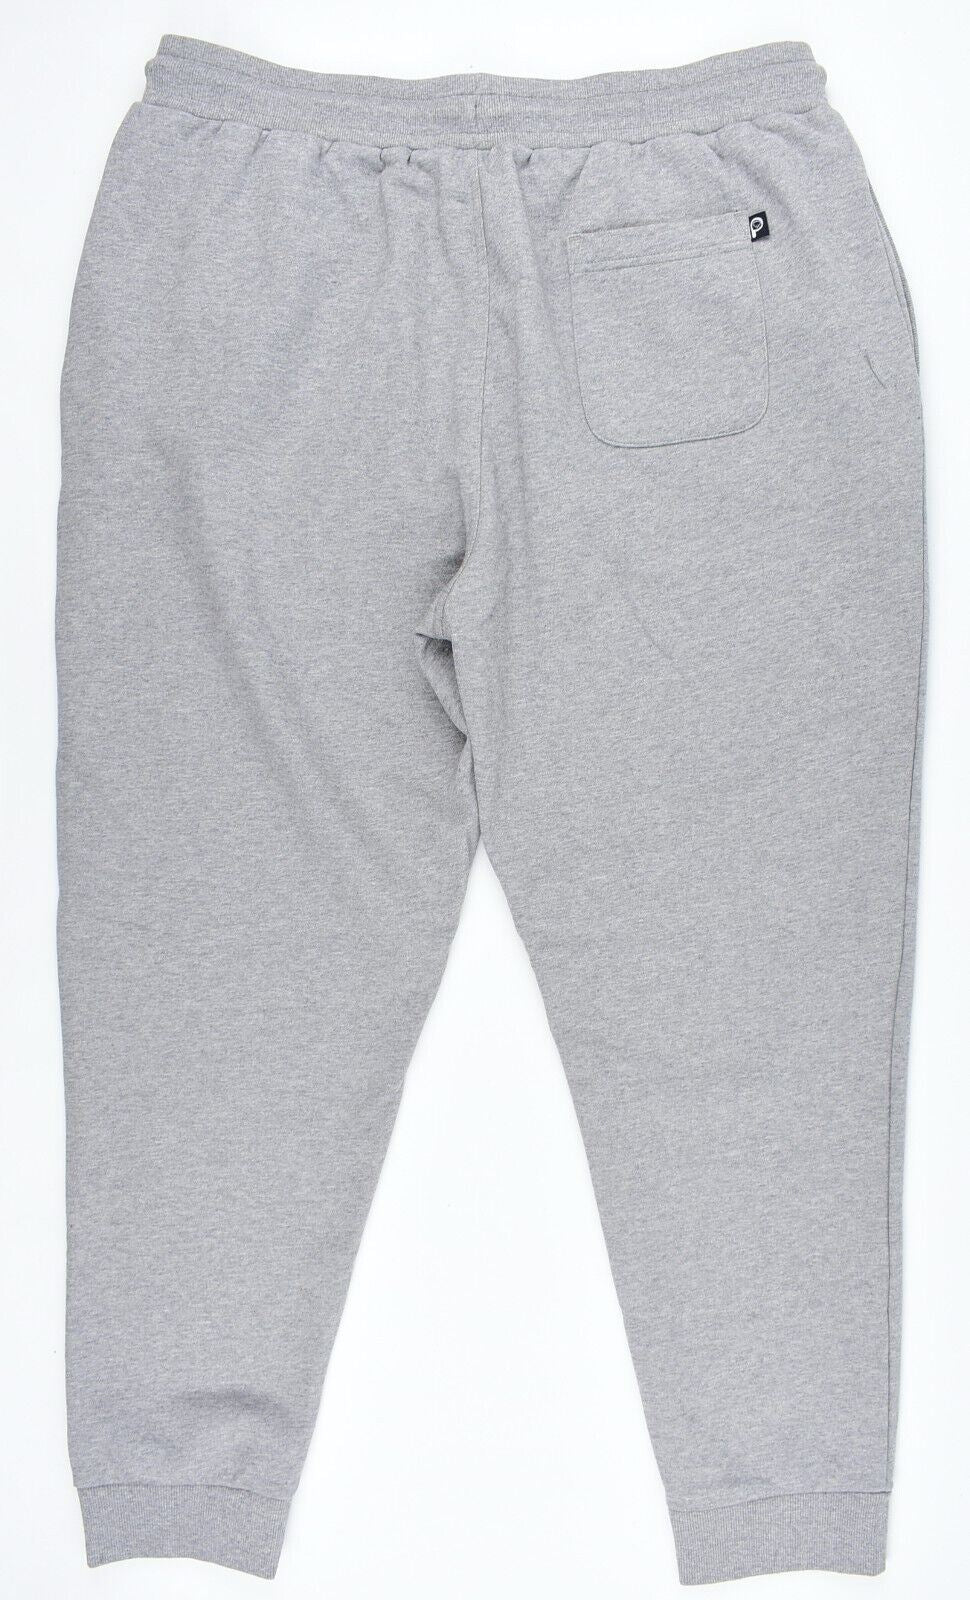 PENFIELD Men's Standard Fit Joggers, Grey Heather, size XL